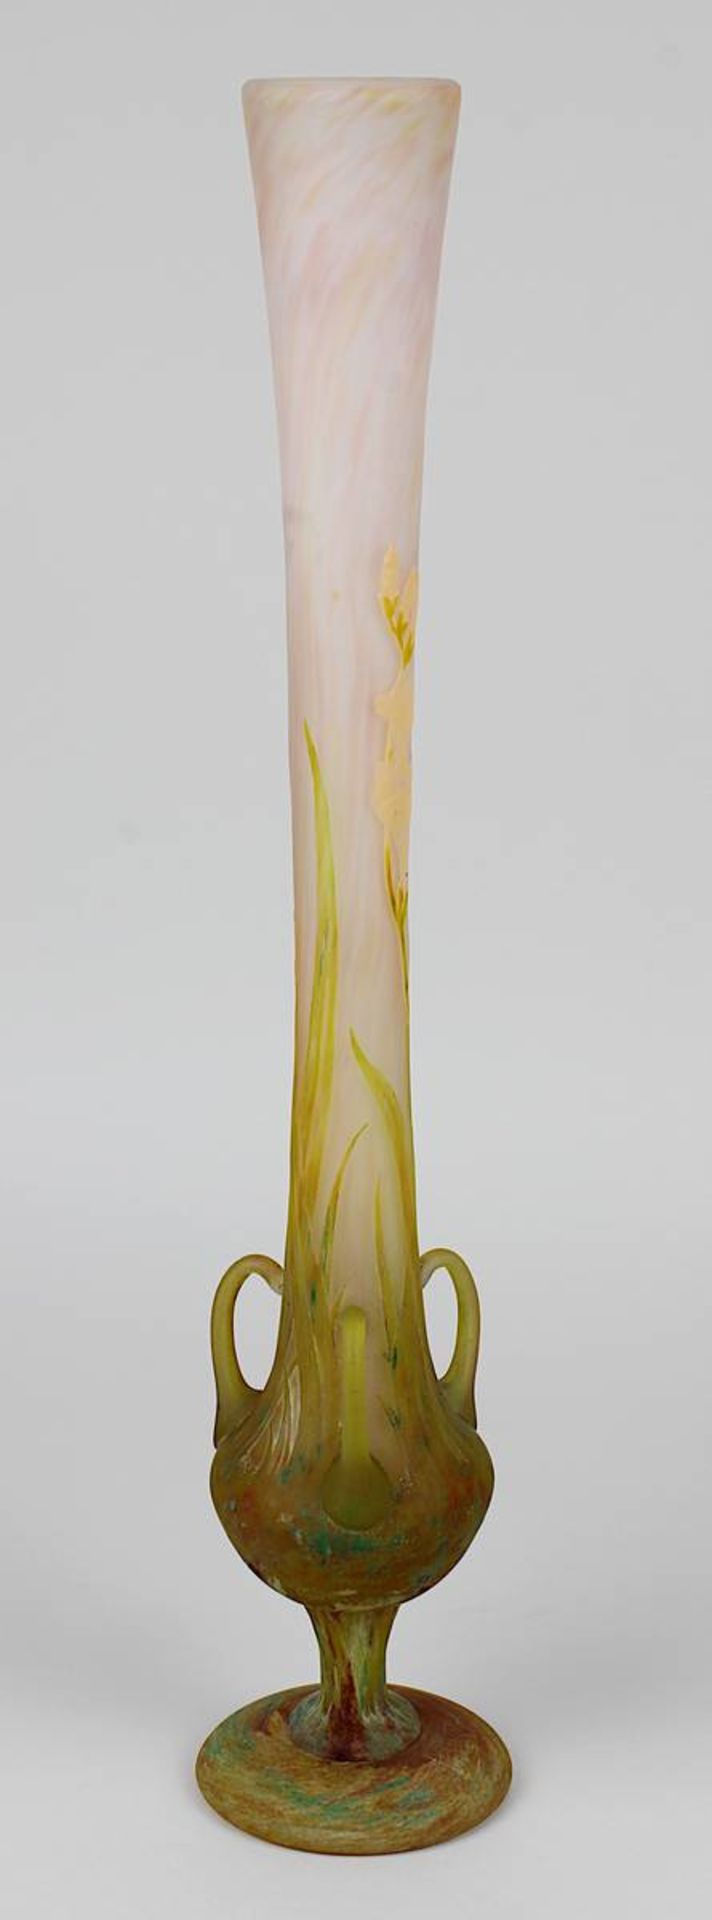 Daum Jugendstil-Vase Freesias, Nancy 1910 - 12, Entwurf wohl Henry Bergér, Luxusglas-Serie, Modell - Bild 2 aus 12